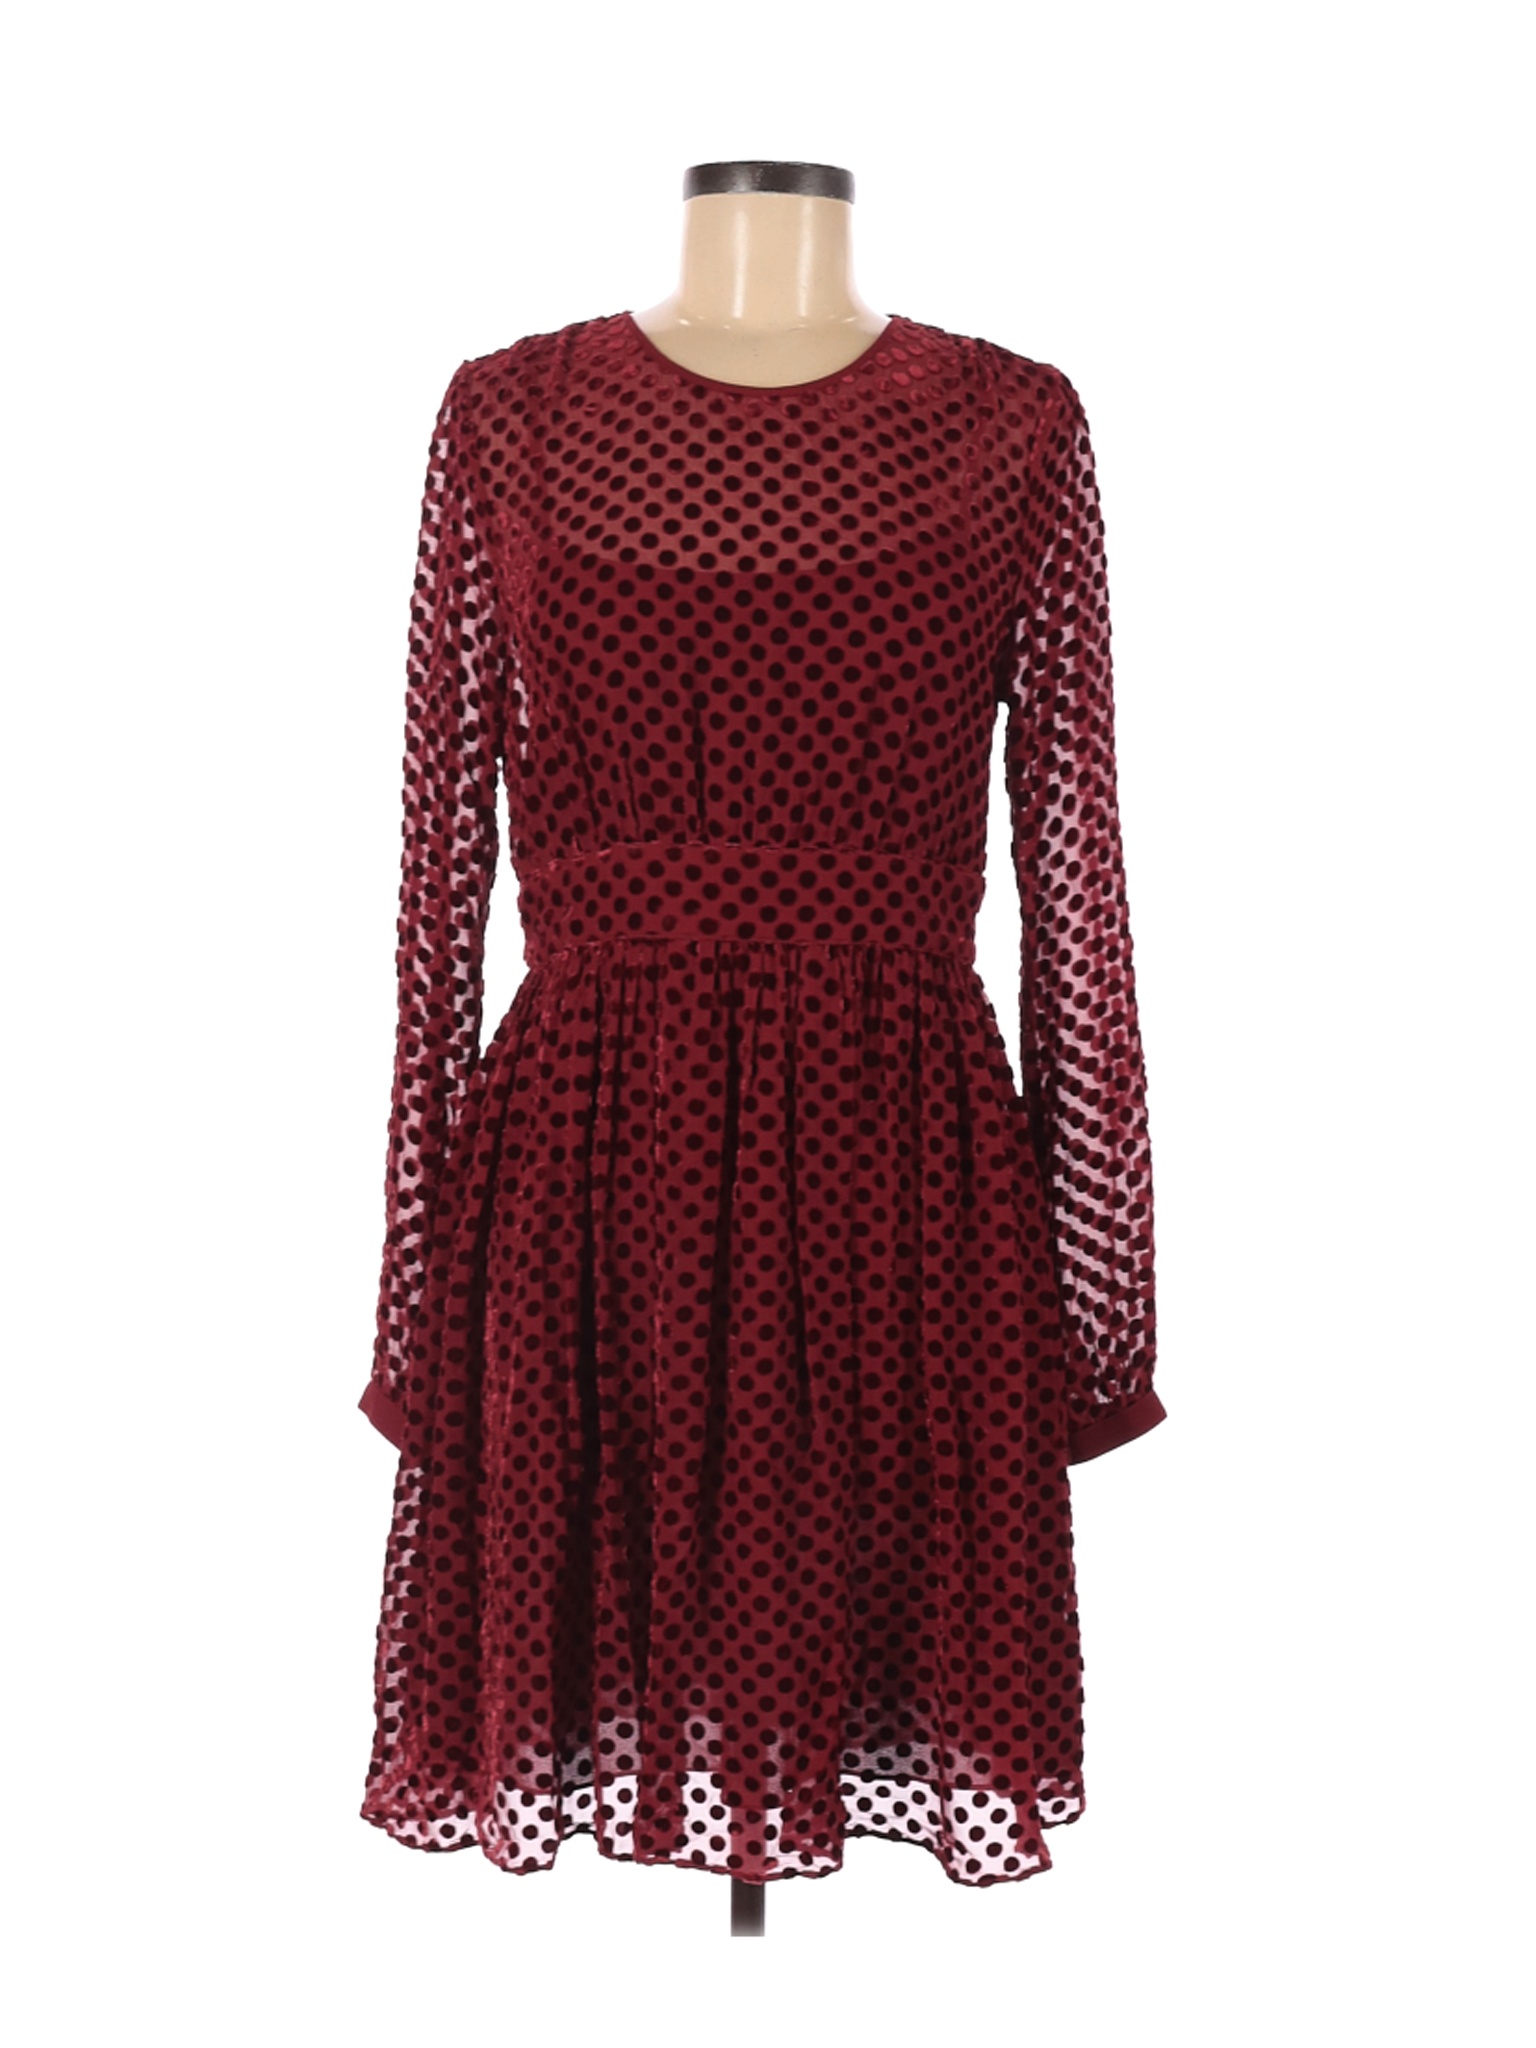 MICHAEL Michael Kors Women Red Cocktail Dress 6 | eBay